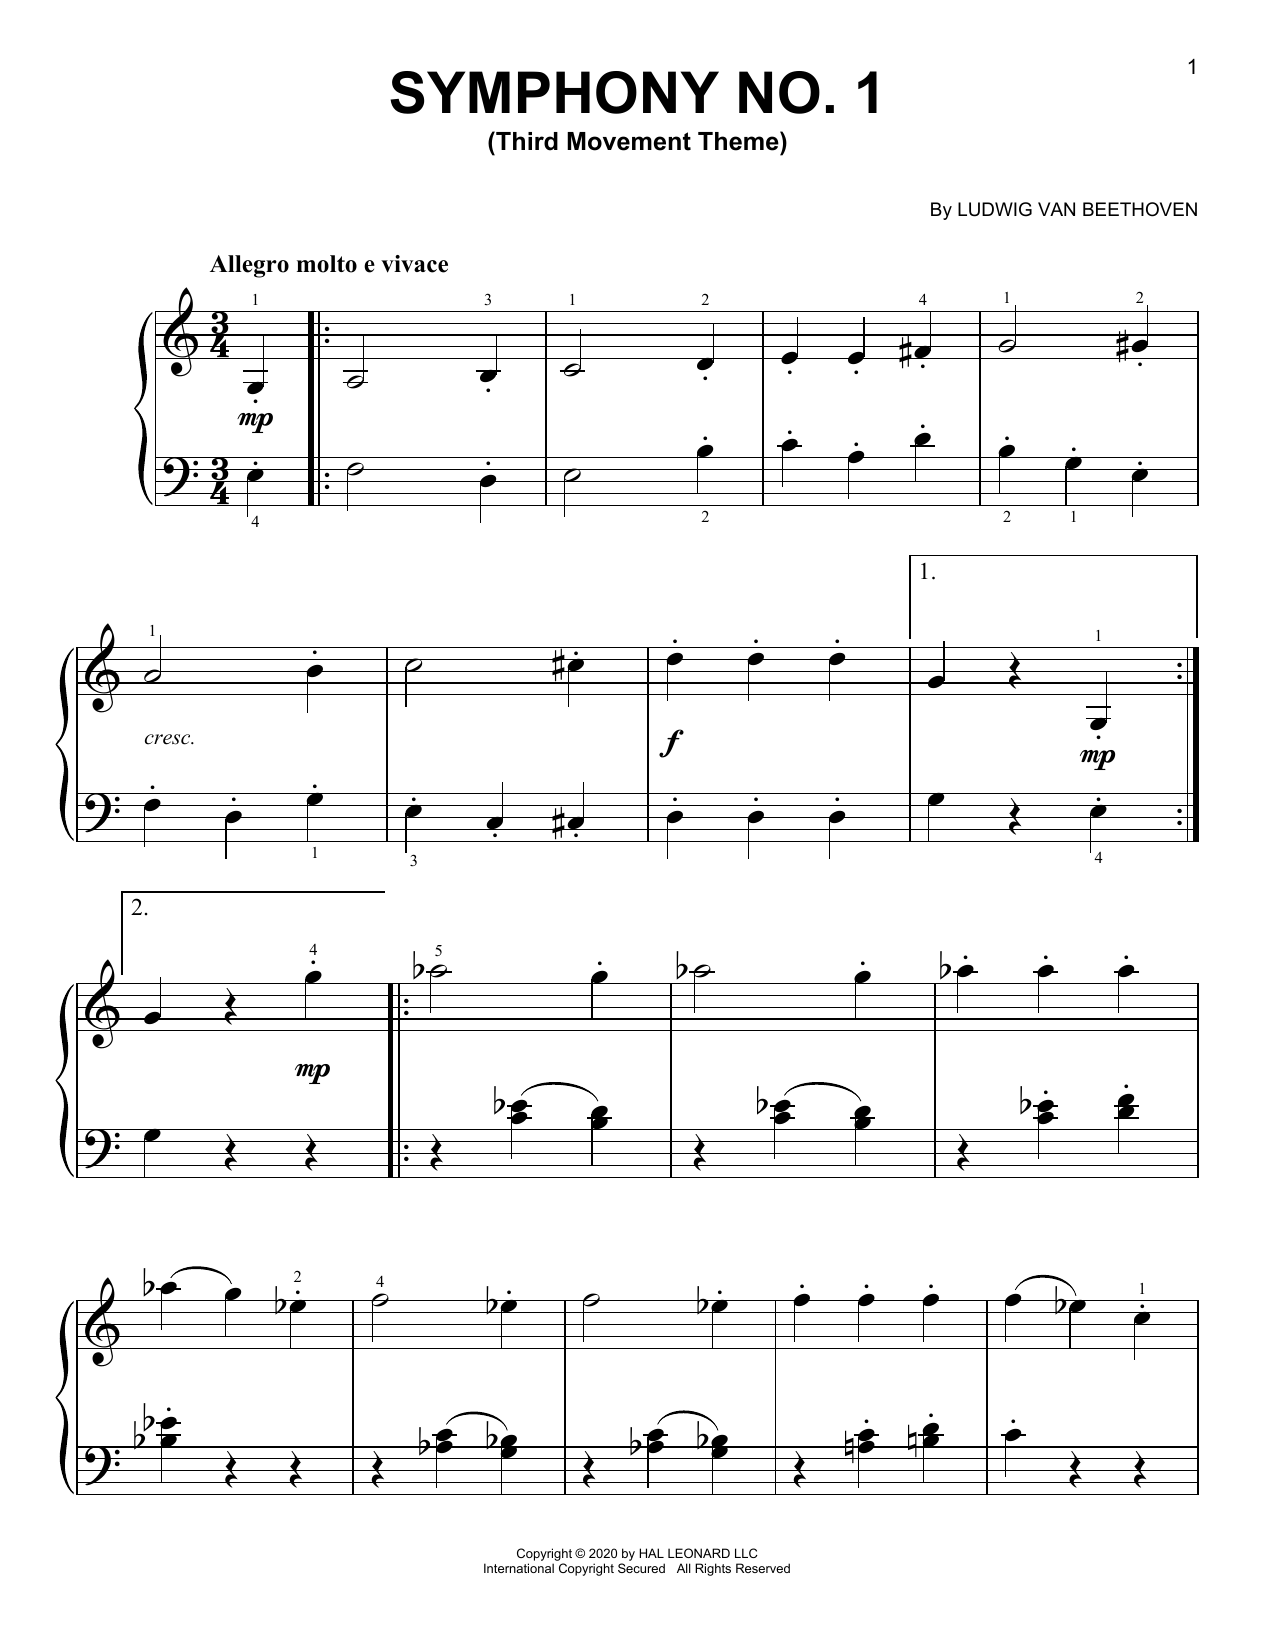 Ludwig van Beethoven Symphony No. 1, Third Movement Excerpt sheet music notes printable PDF score